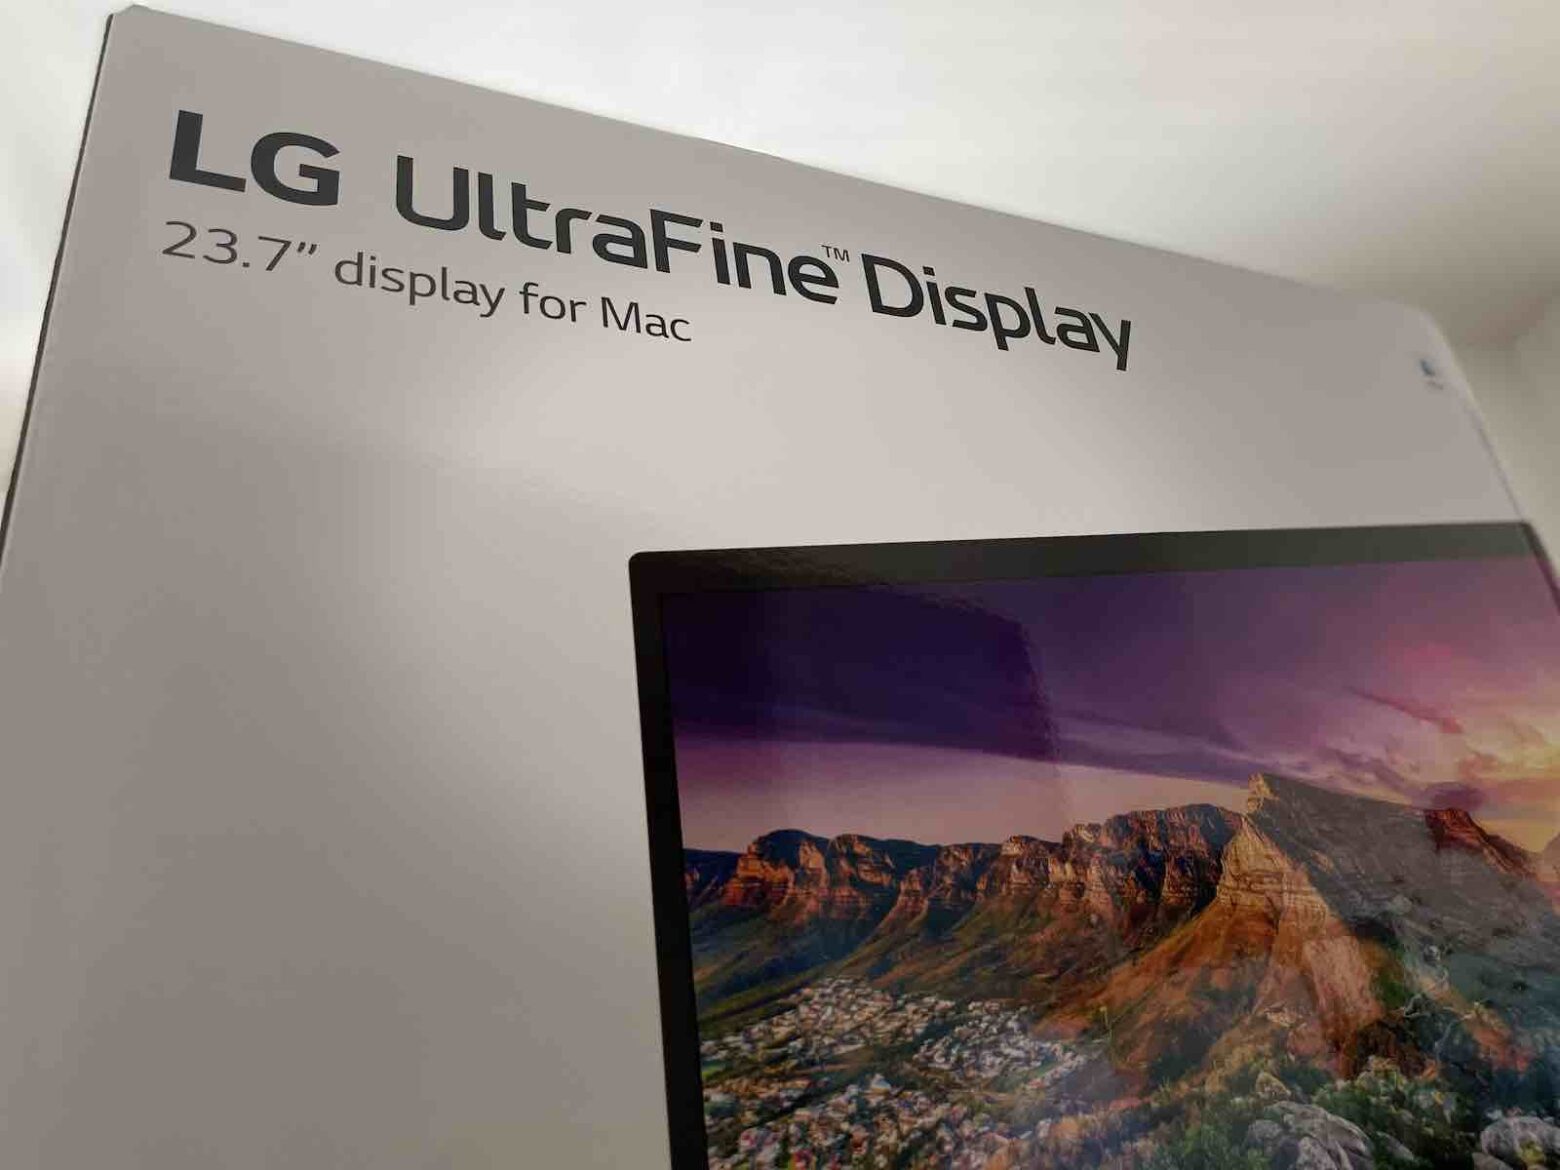 LG UltraFine 4K Display